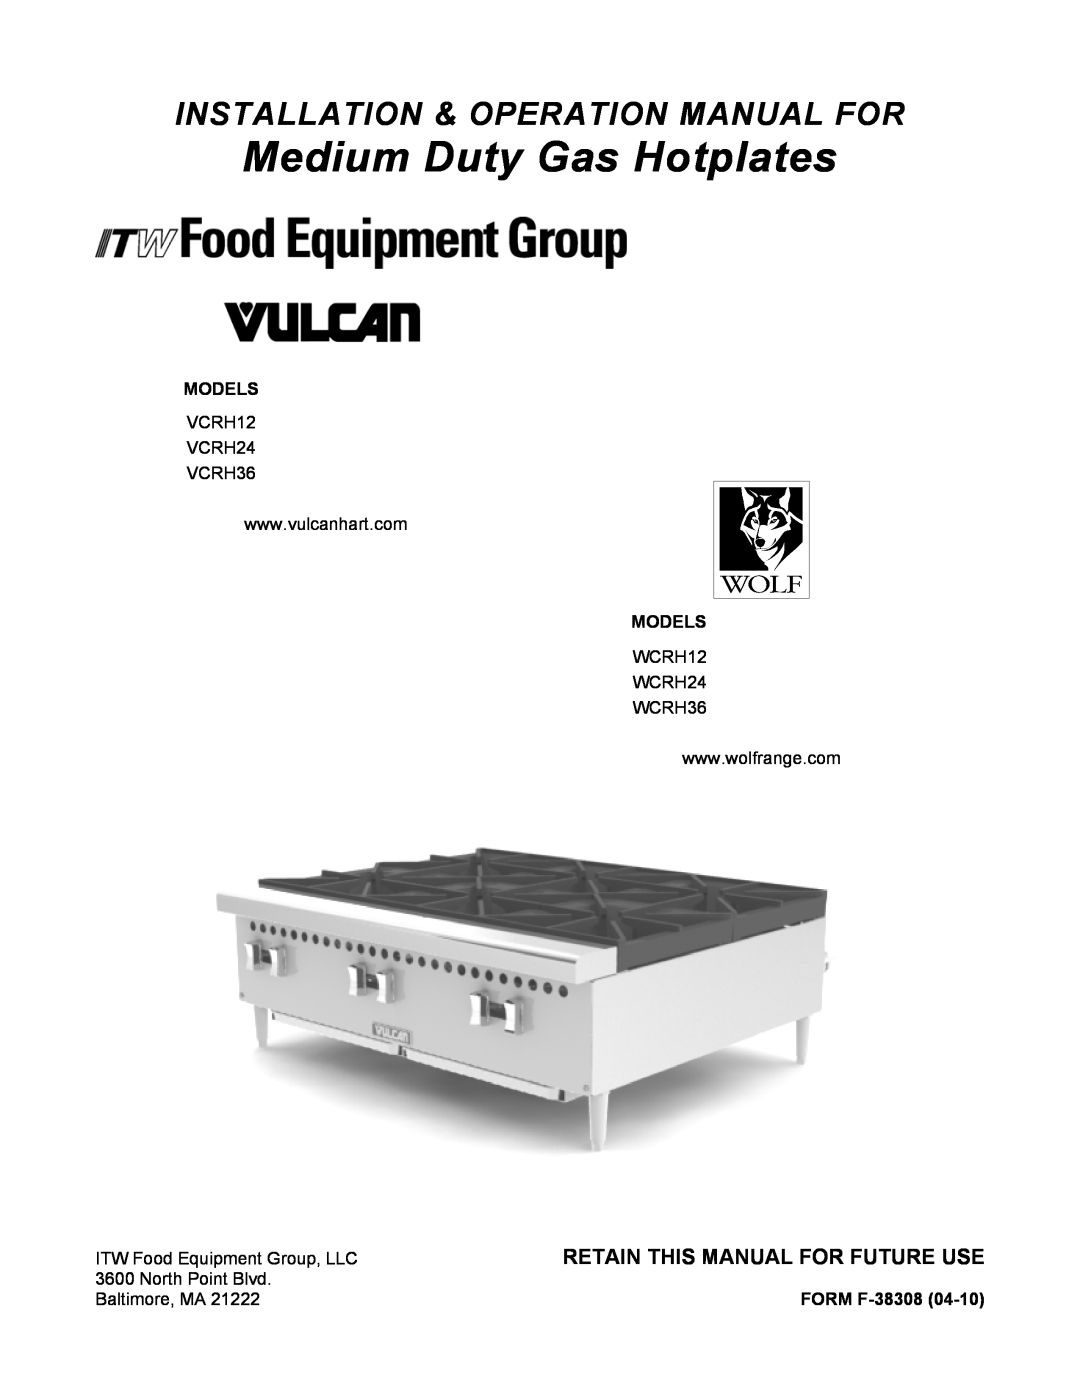 Vulcan-Hart VCRH12 operation manual Medium Duty Gas Hotplates, VCRH36, Models, ITW Food Equipment Group, LLC, FORM F-38308 